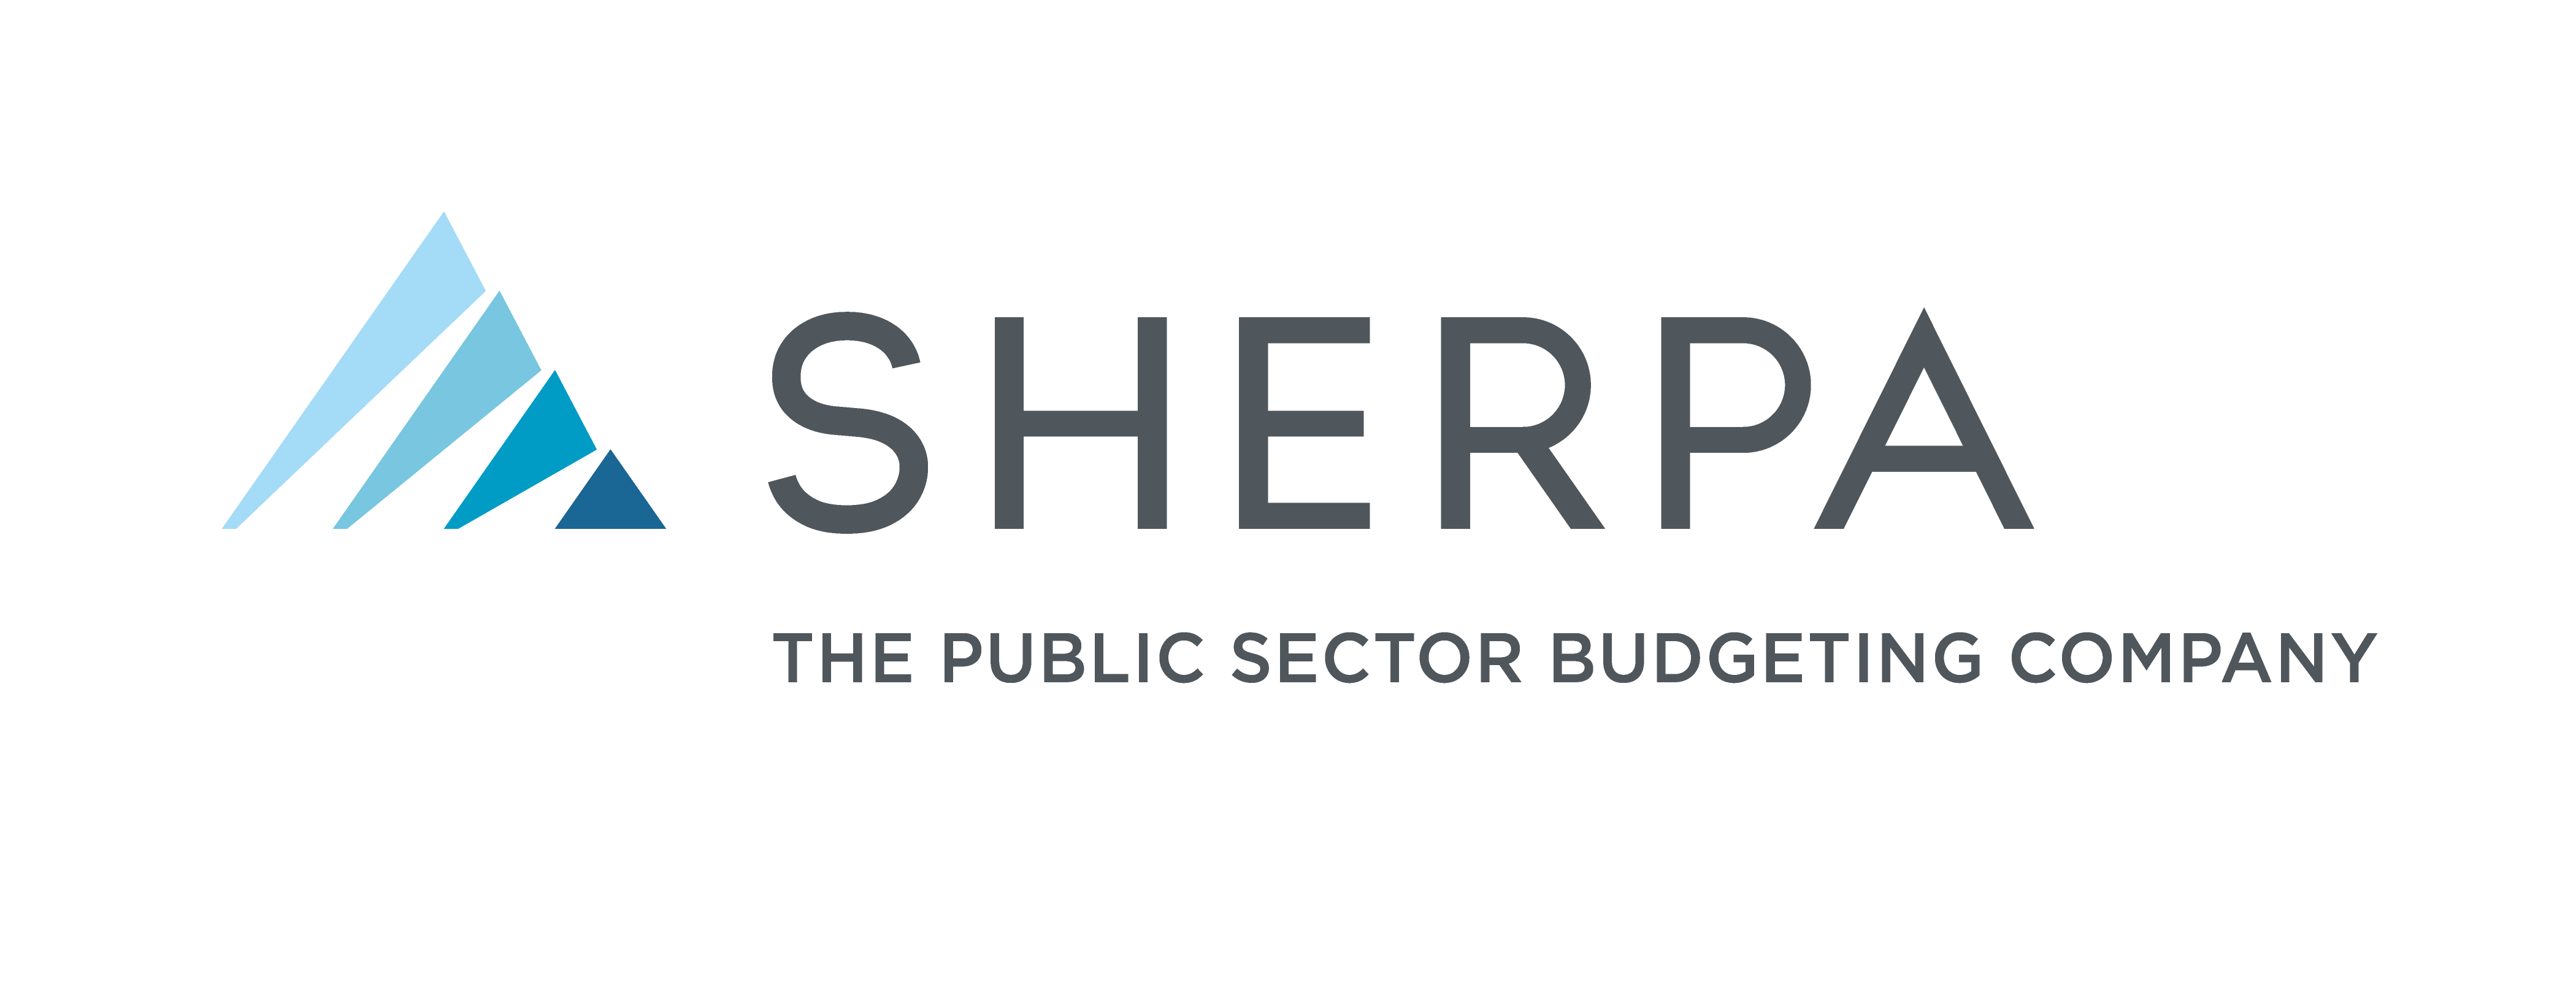 the-public-sector-budgeting-company-rgb-hq-2